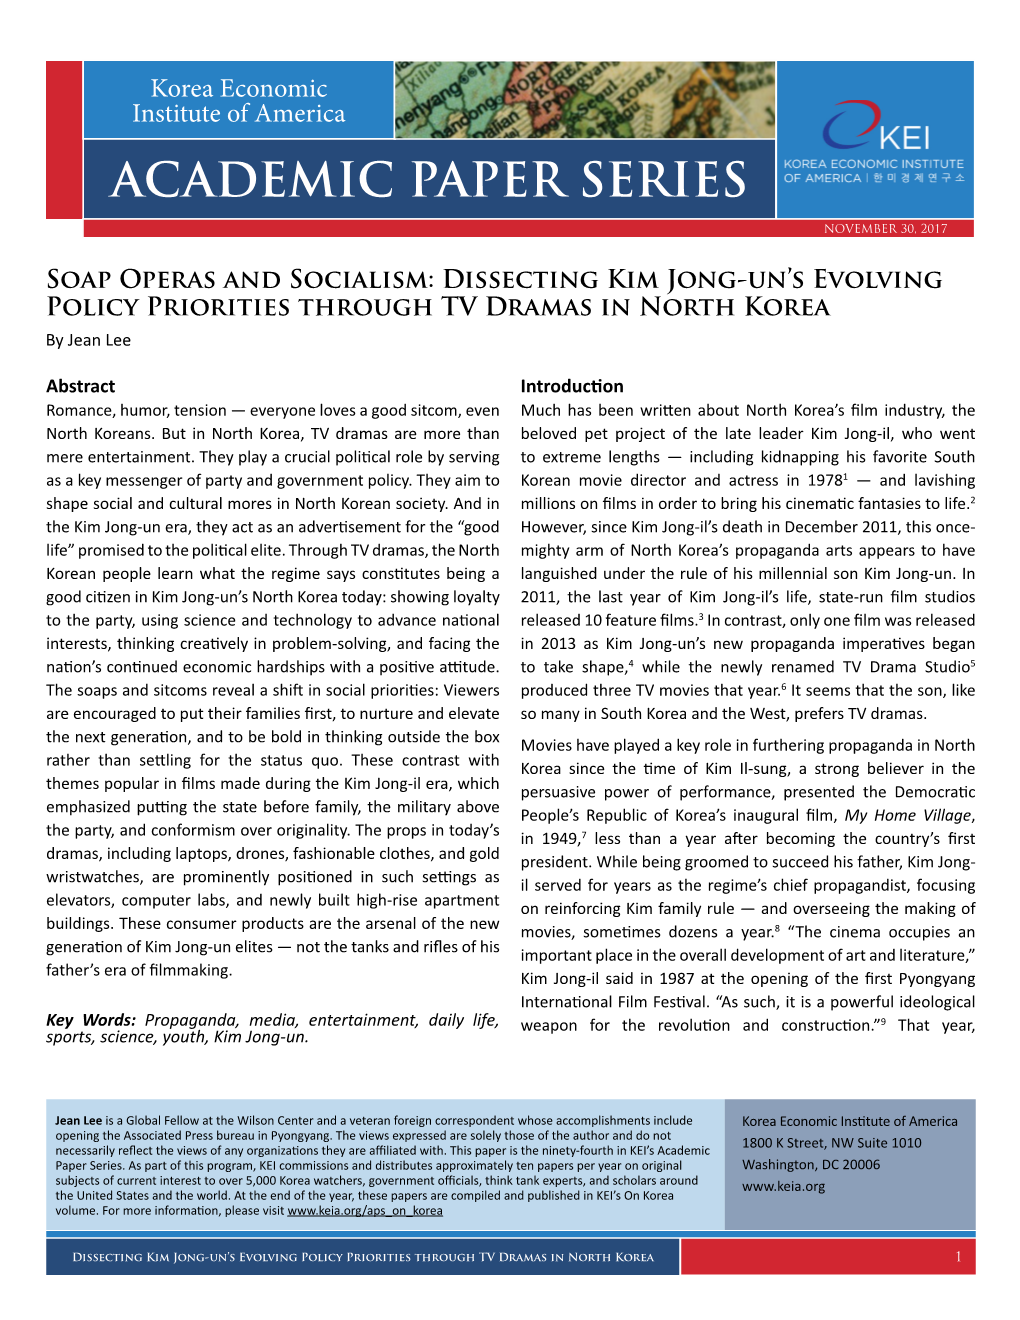 Academic Paper Series